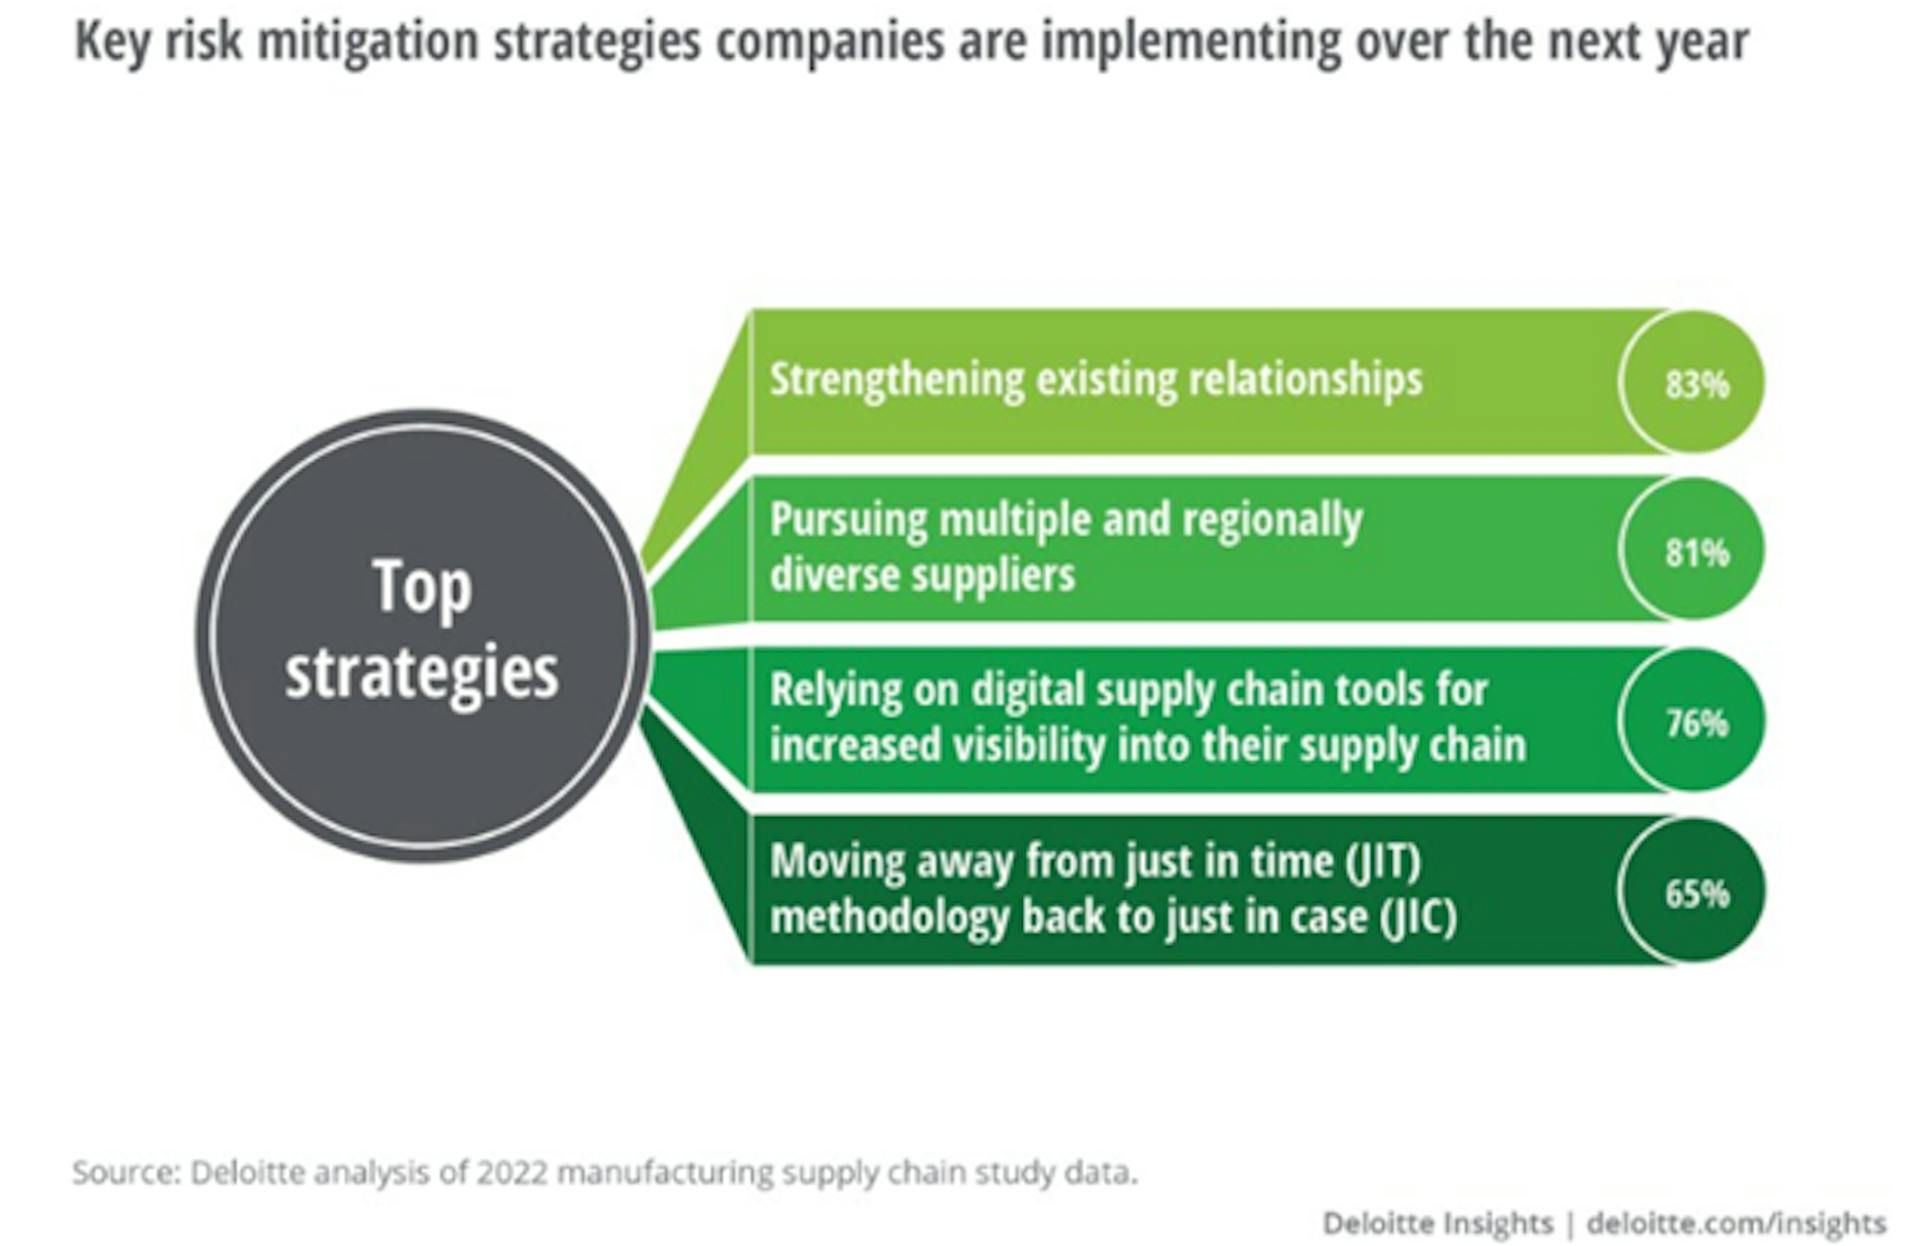 Manufacturing Supply Chain Study Data 2022; Source: Deloitte